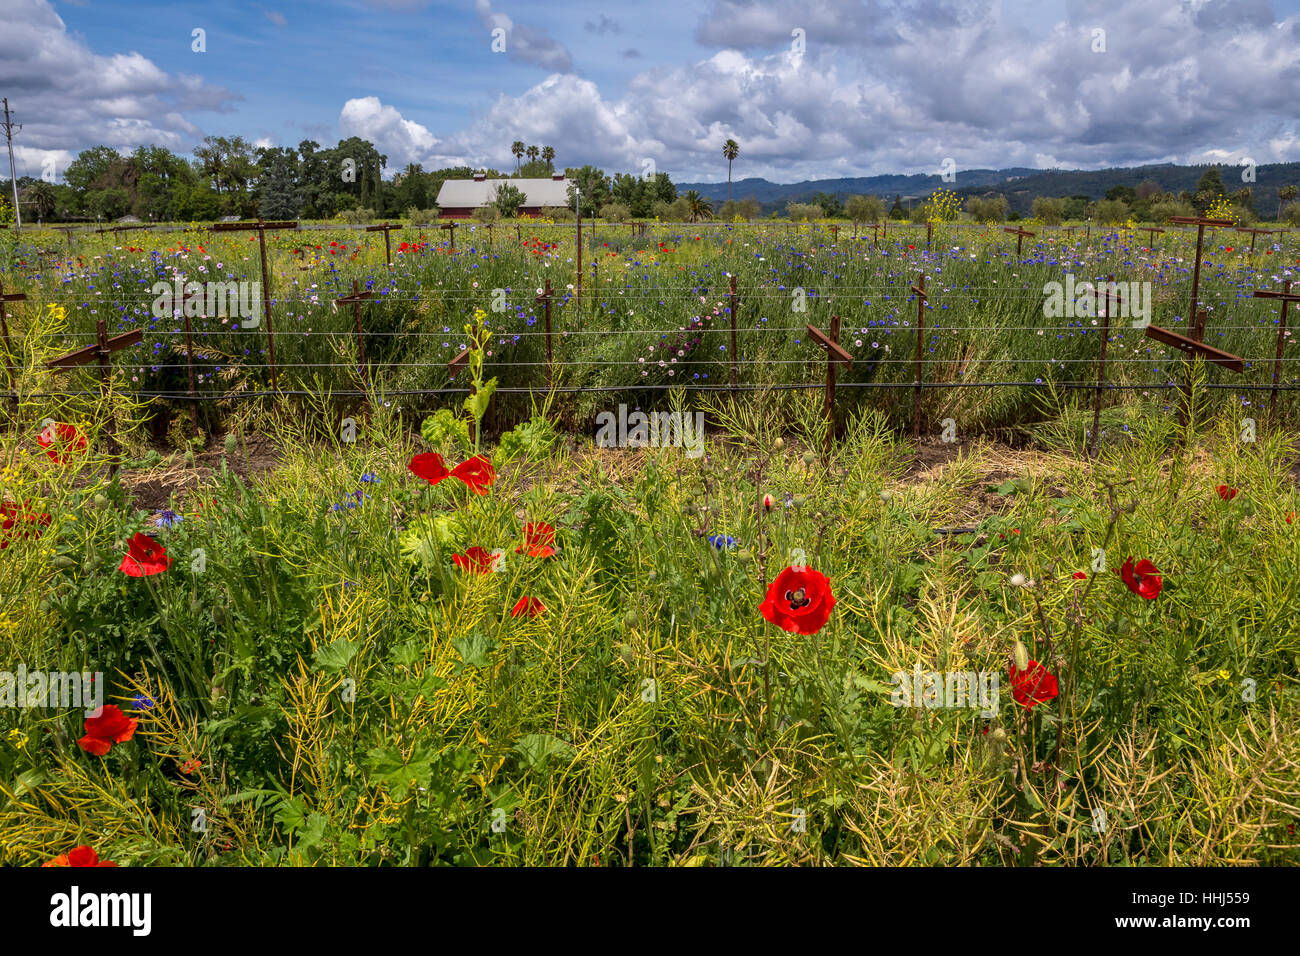 California poppy, California poppies, red poppy flowers, wildflowers, vineyard, Round Pond Estate, Rutherford, Napa Valley, Napa County, California Stock Photo